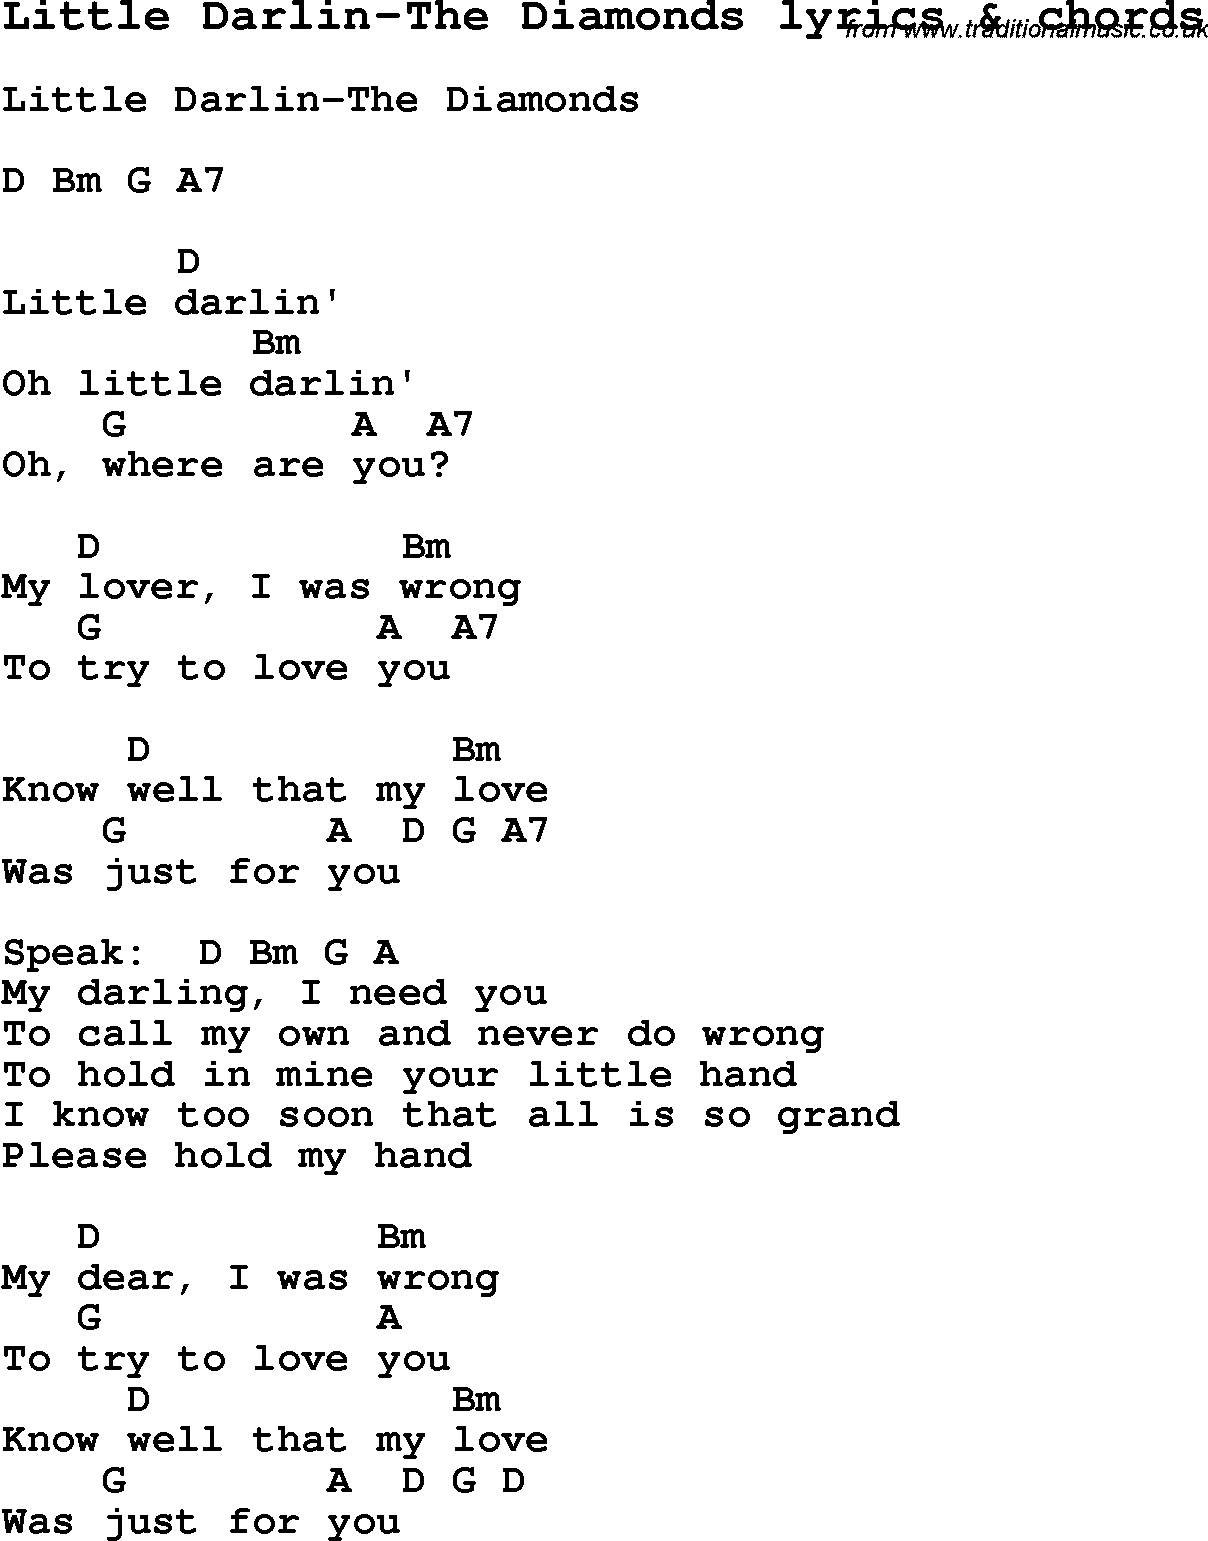 Love Song Lyrics for: Little Darlin-The Diamonds with chords for Ukulele, Guitar Banjo etc.